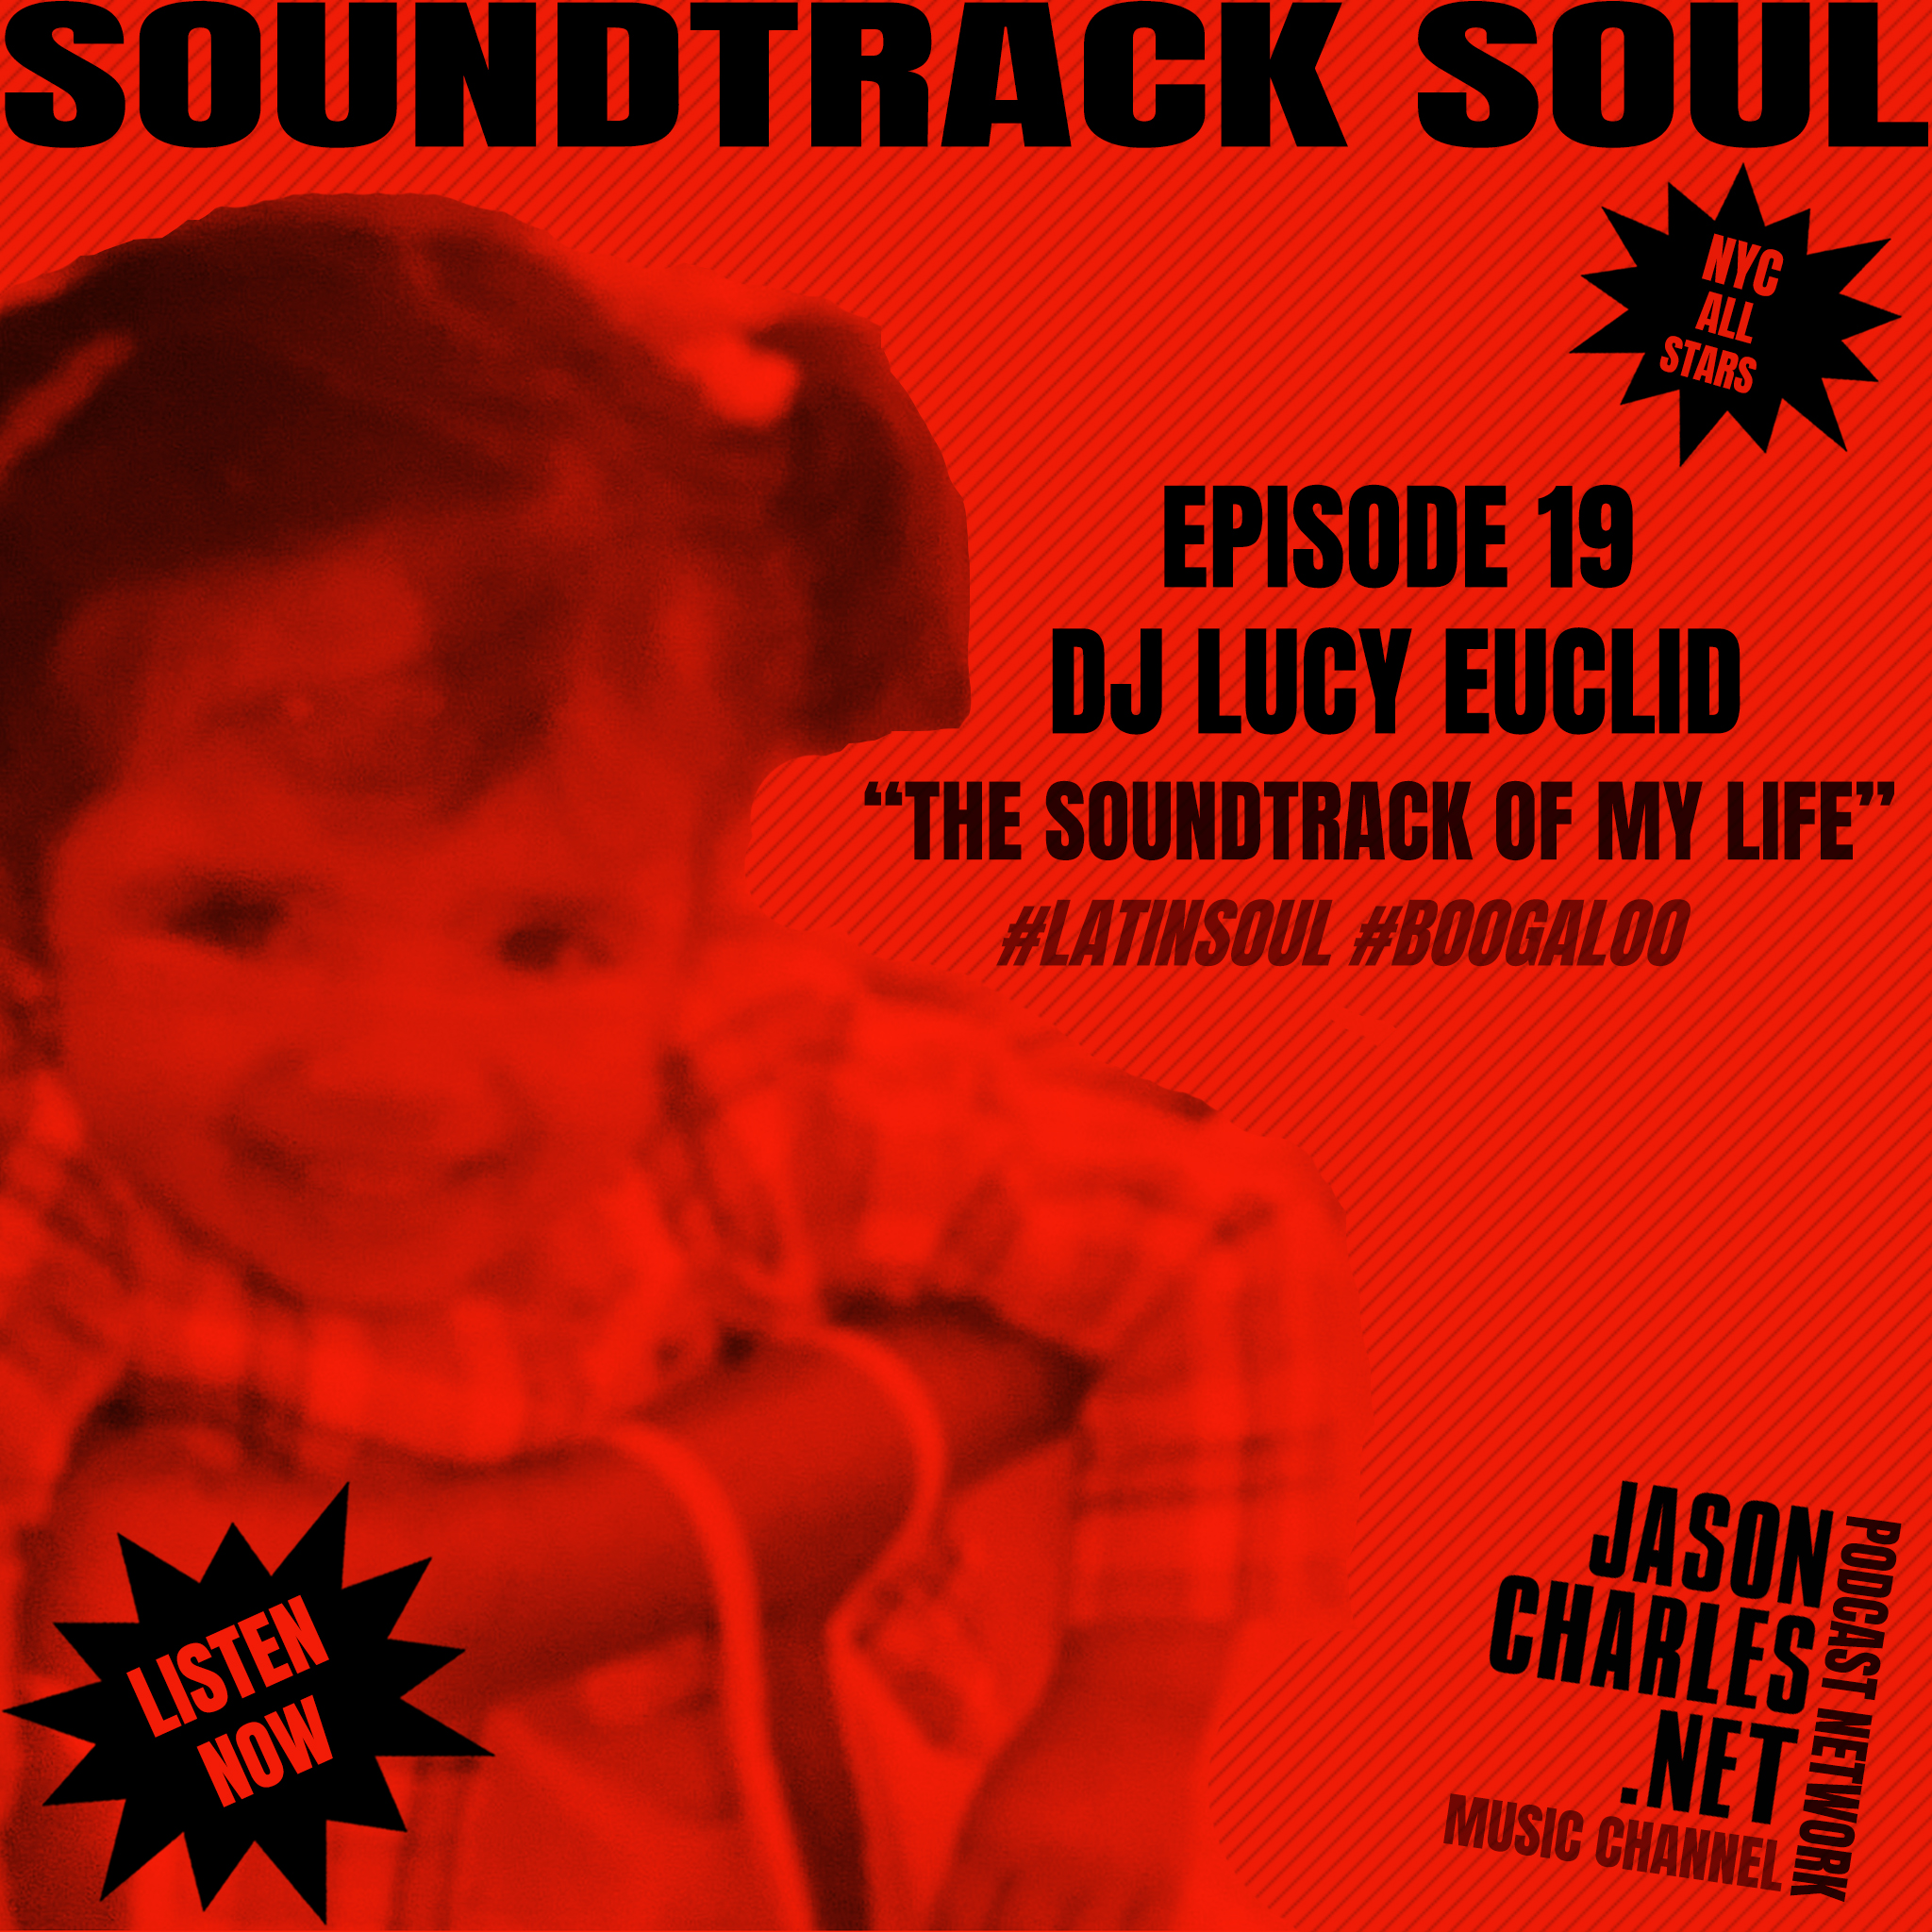 SOUNDTRACK SOUL Episode 19 DJ LUCY EUCLID "The Soundtrack Of My Life"